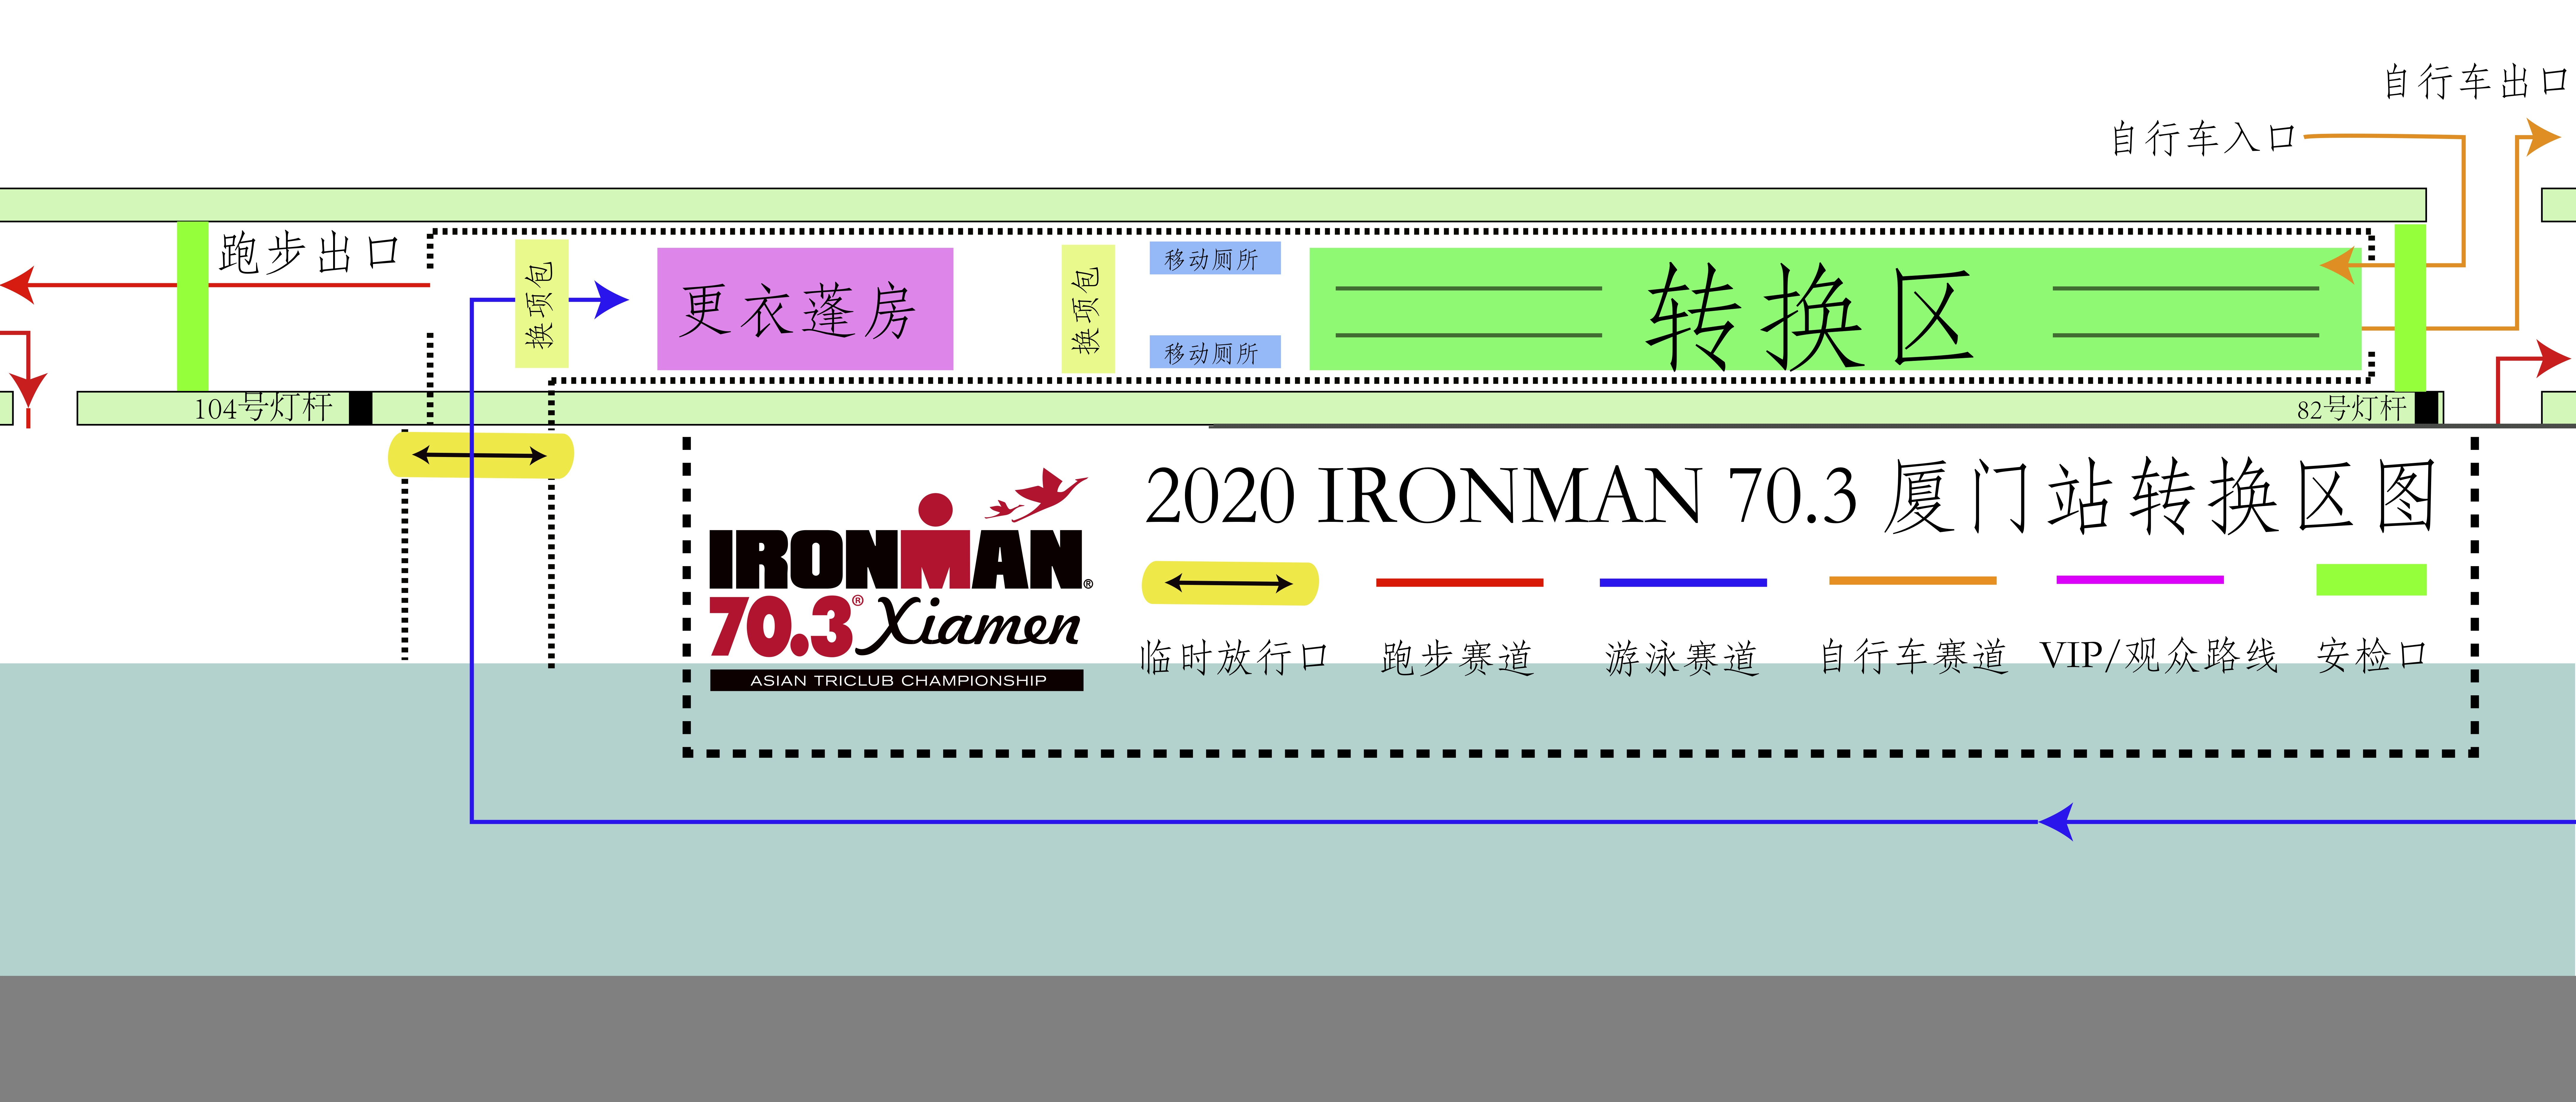 5 2018 IRONMAN 70.3 厦门站主转换区图.jpg